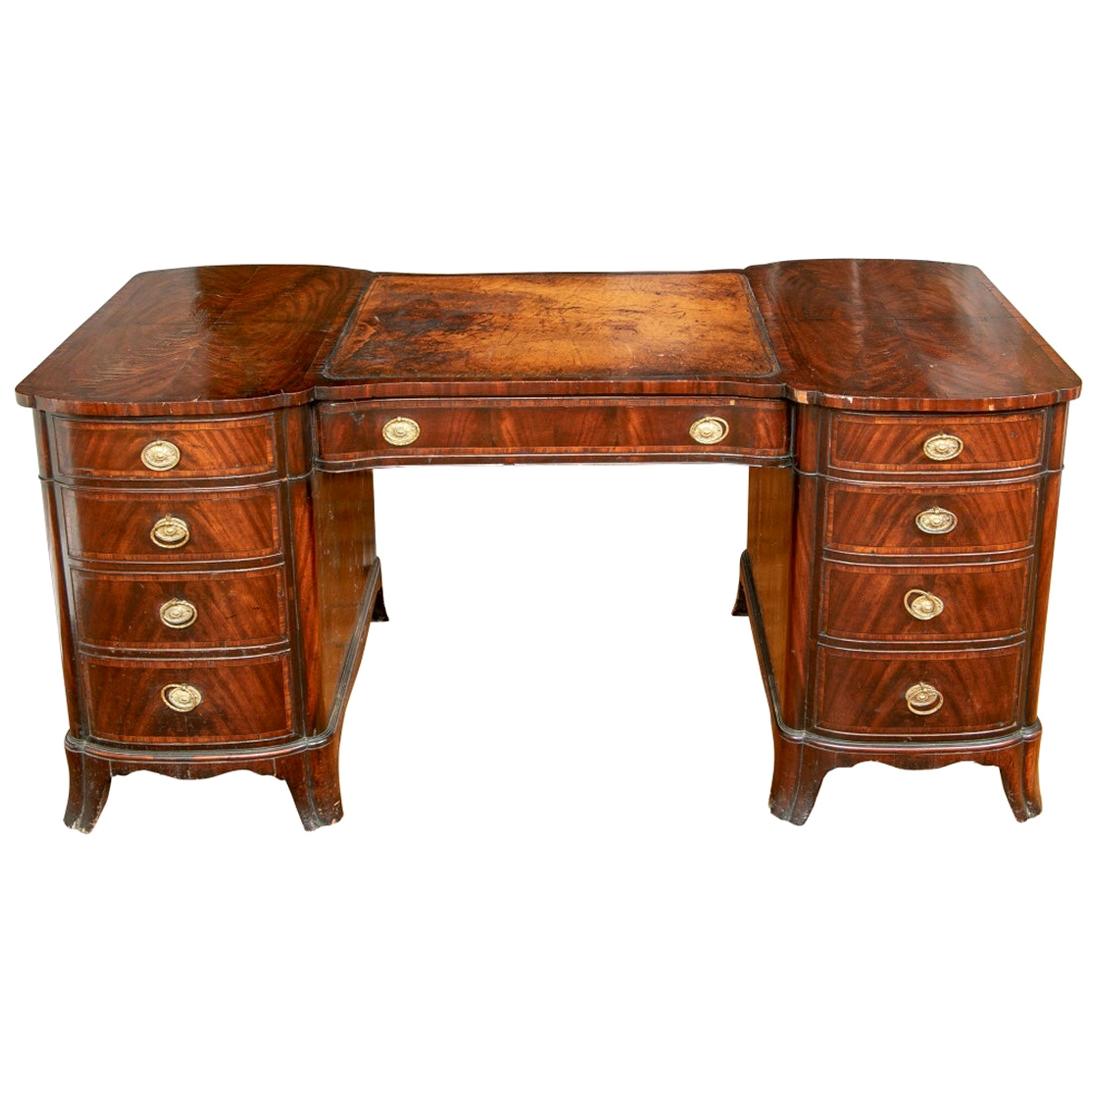 George III Burled Leather Top Desk